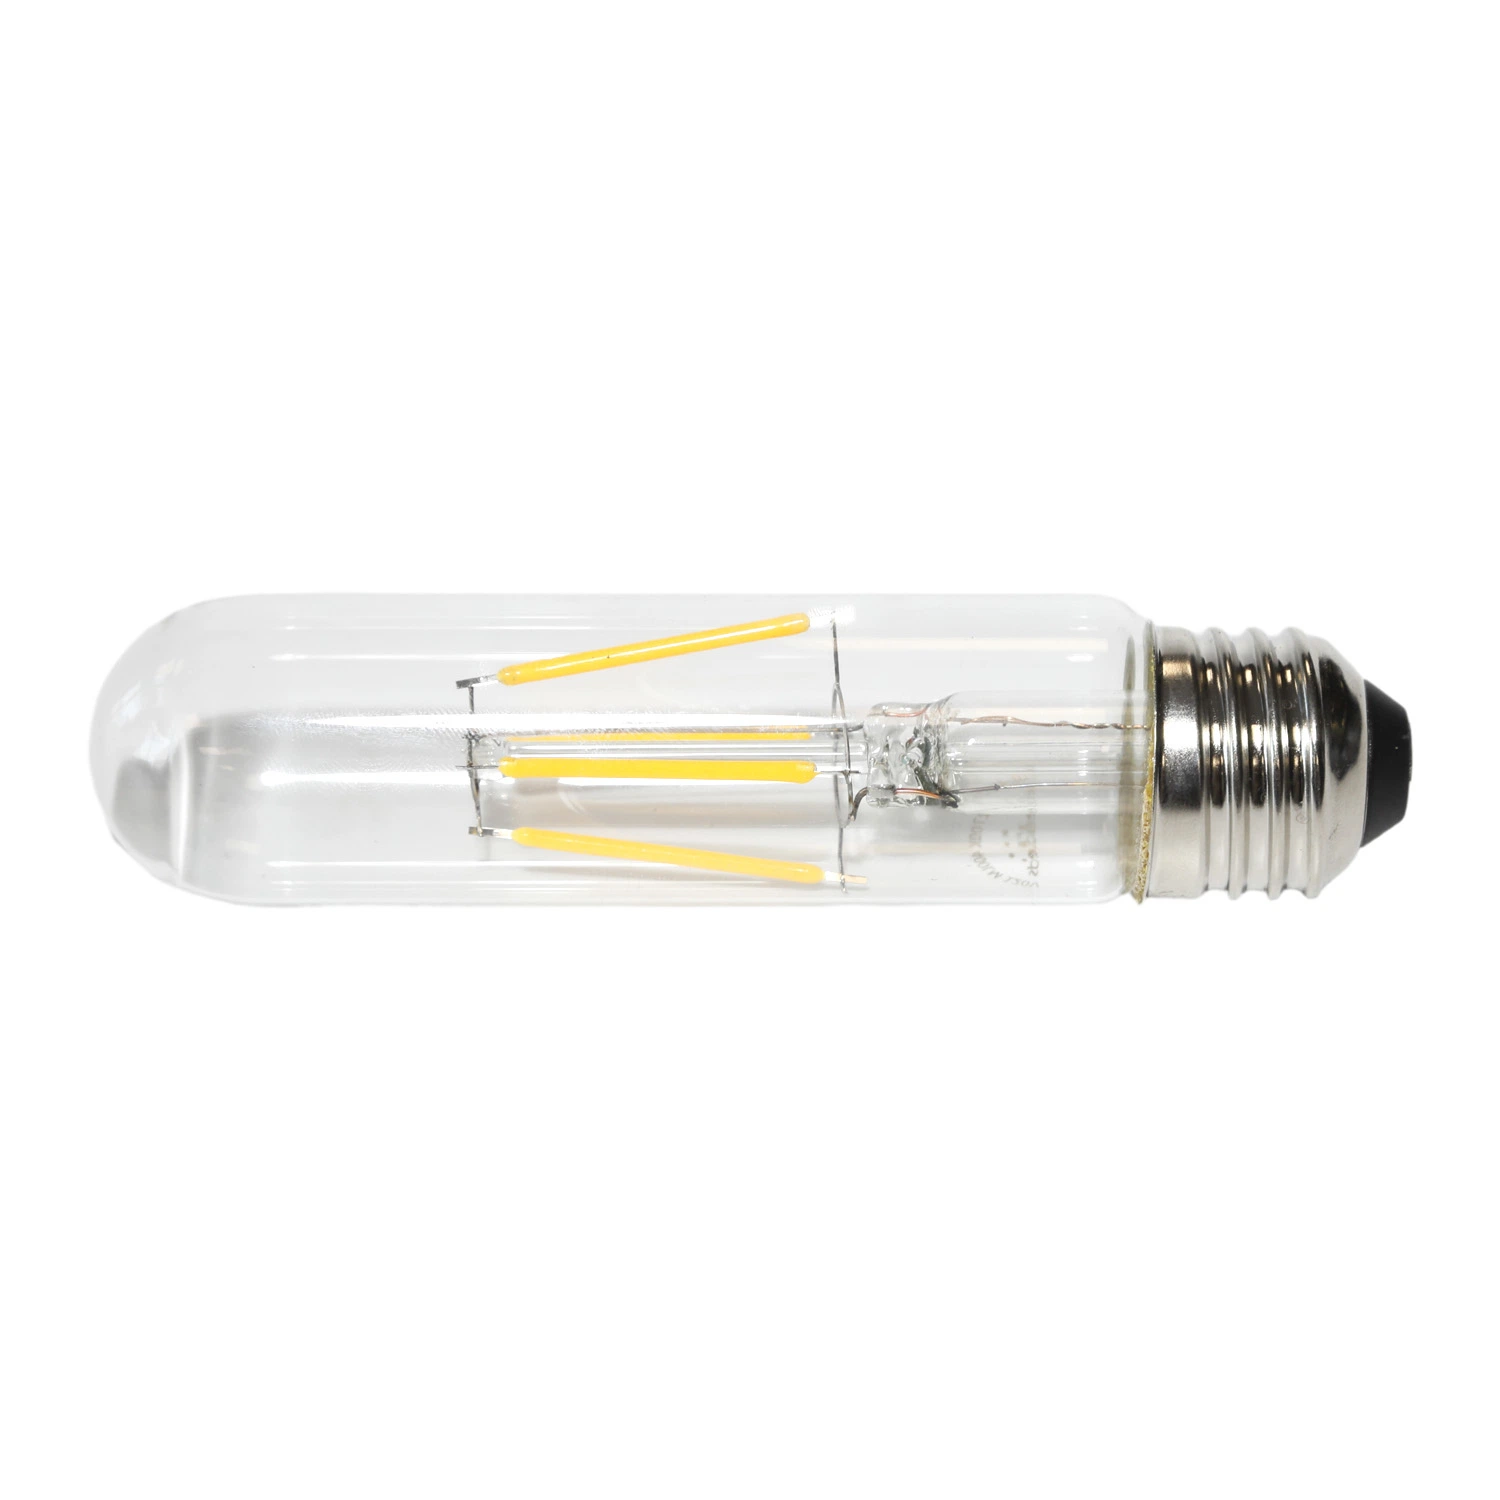 LED Filament Bulb Light LED Filament Light Bulb St64 12W